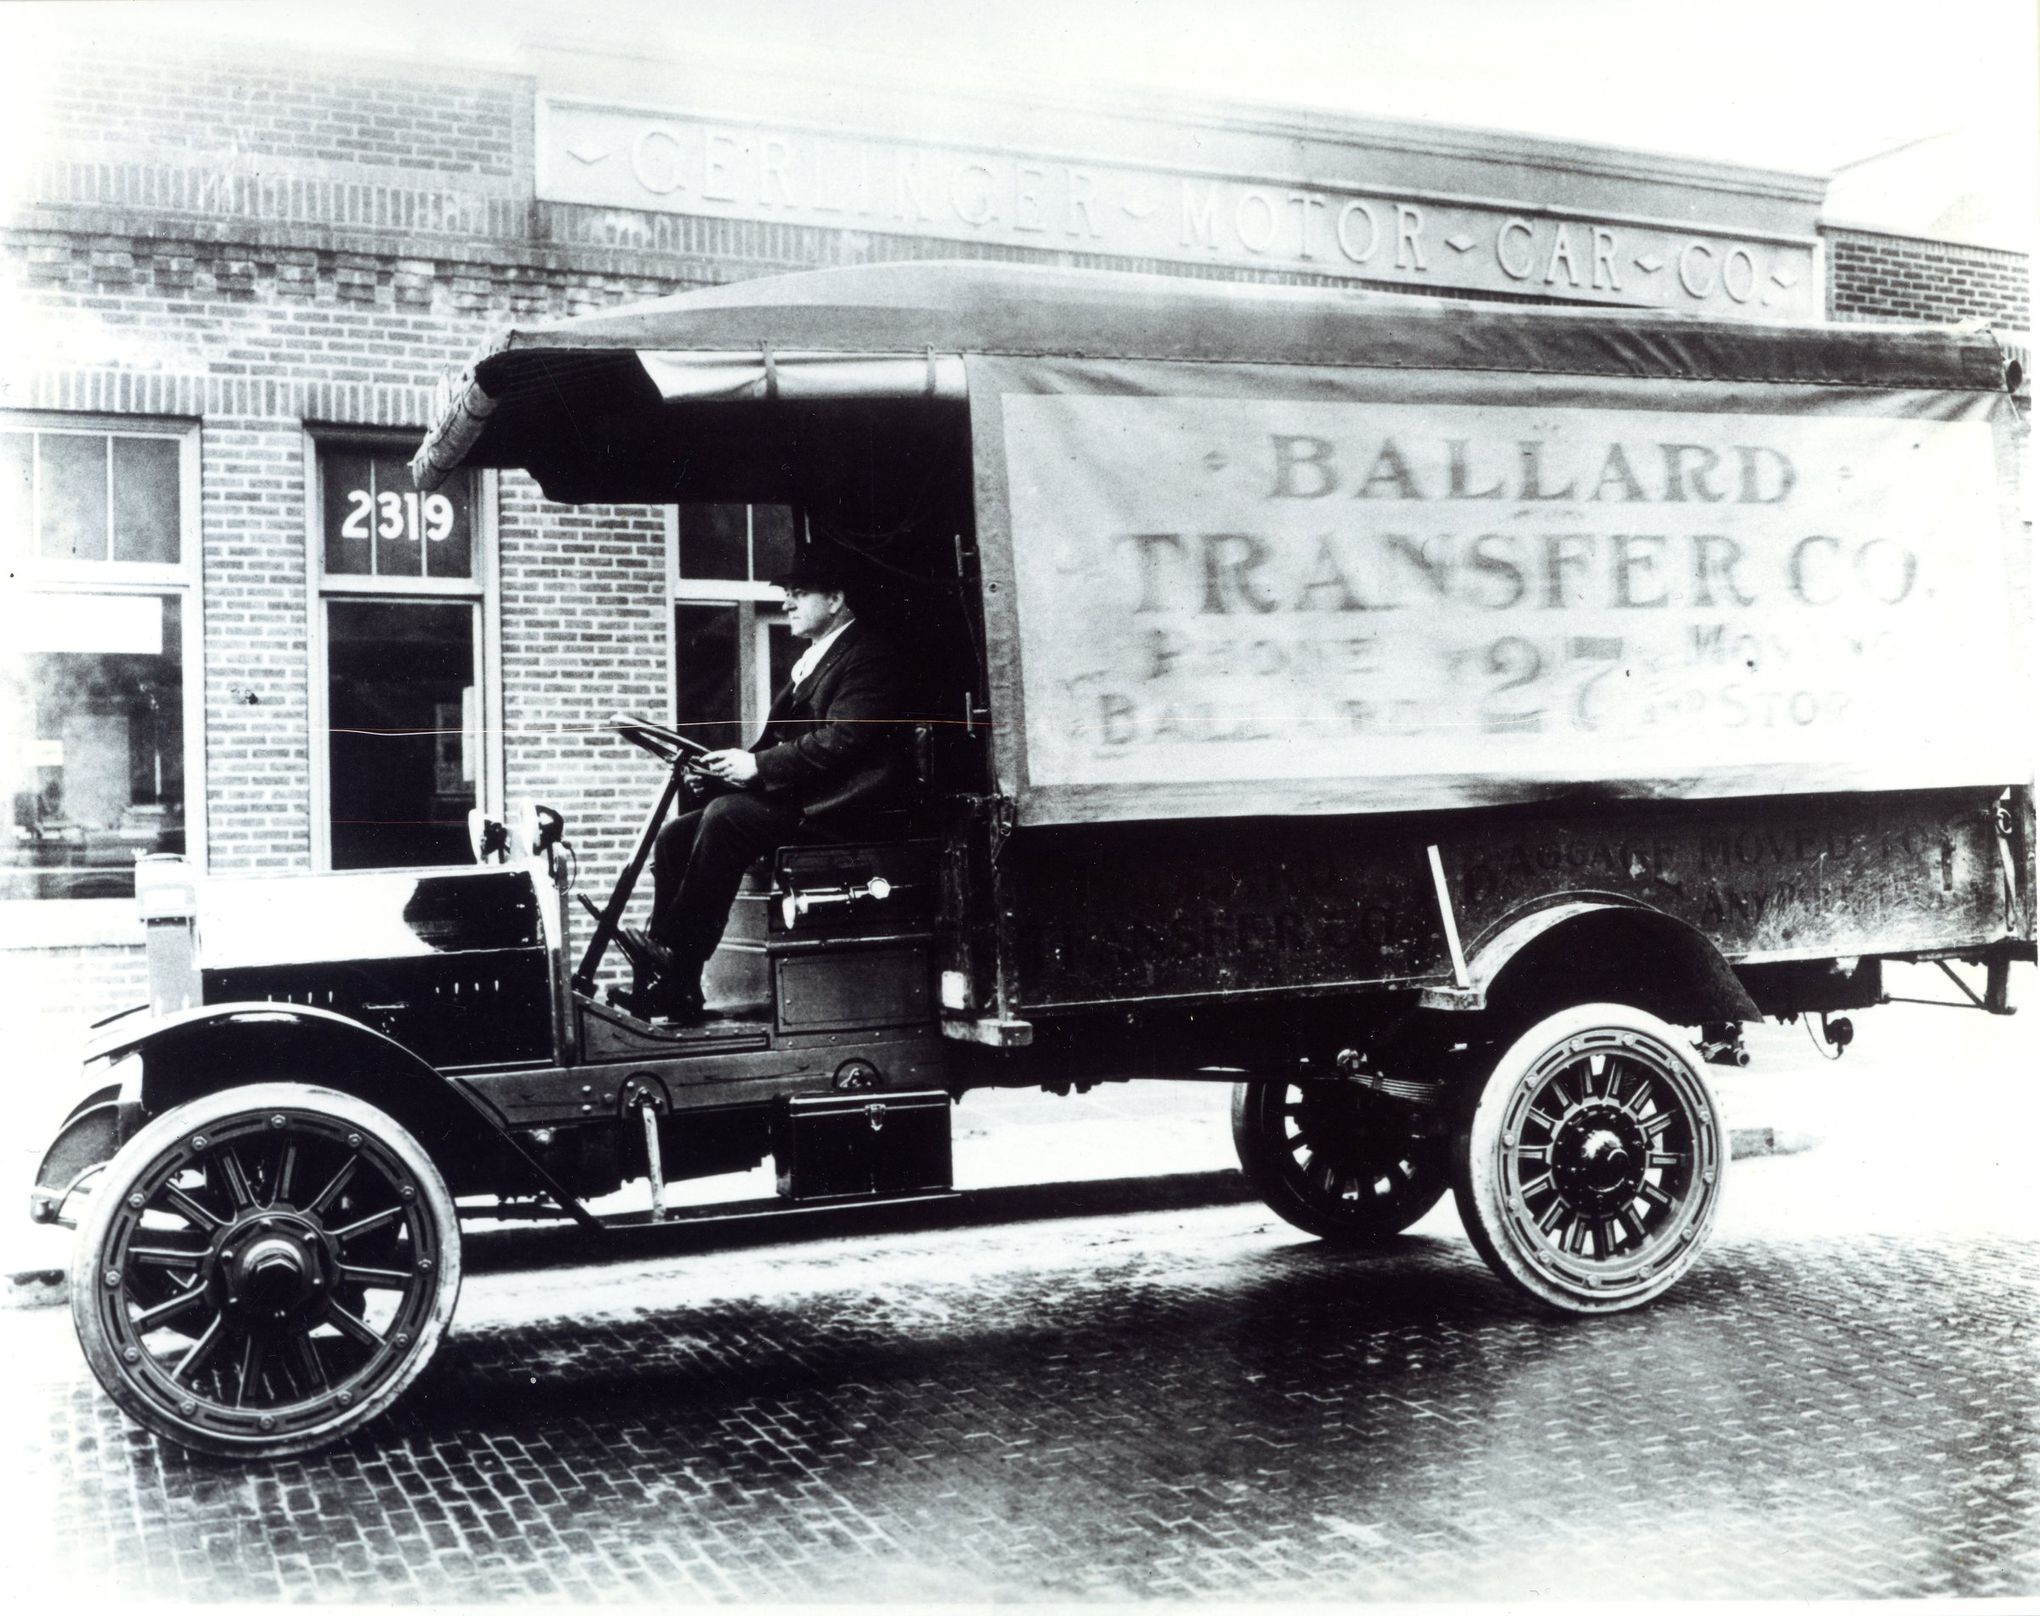 After 113 years, Ballard Transfer hoists its last load